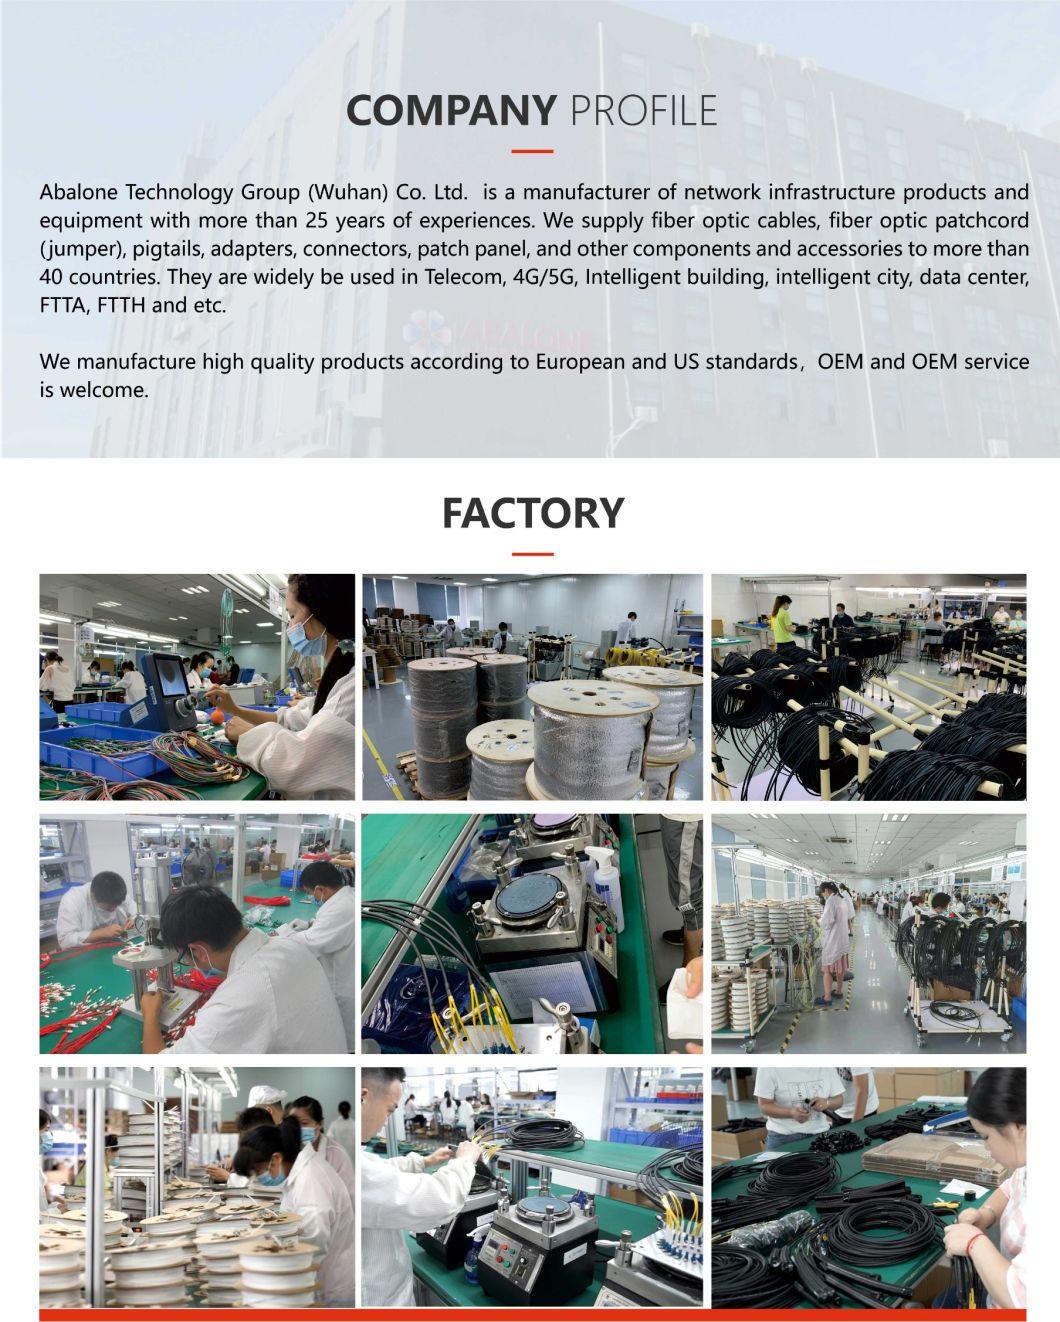 Abalone Factory Supply Distribution Module Panel, Cat 6/6A, UTP, 1u, 24 Port